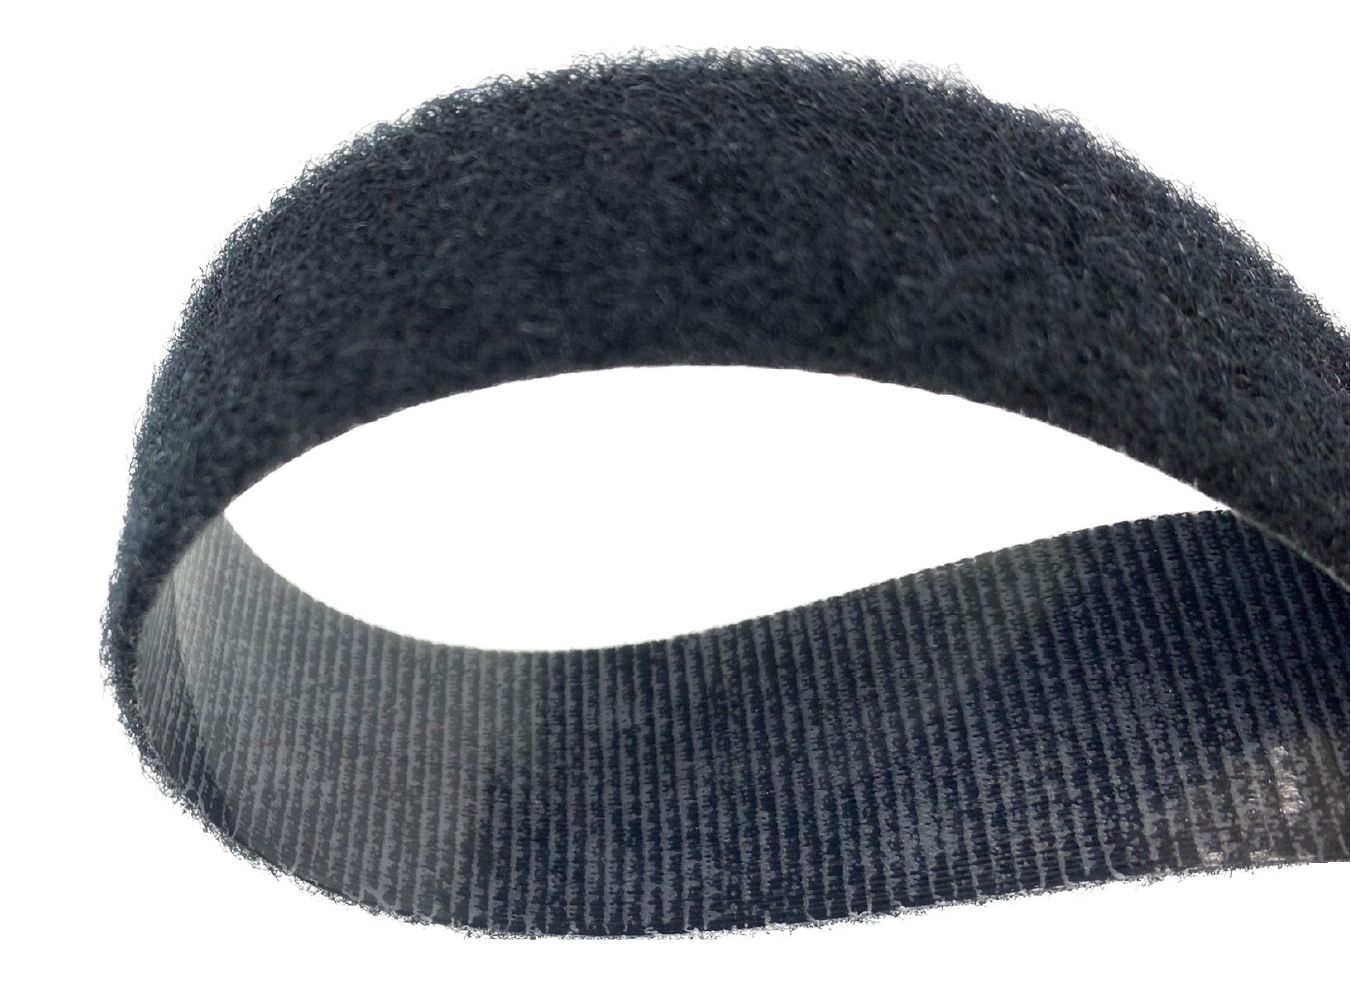 Velcro Brand - 1 inch Black Loop: Pressure Sensitive Adhesive - Rubber